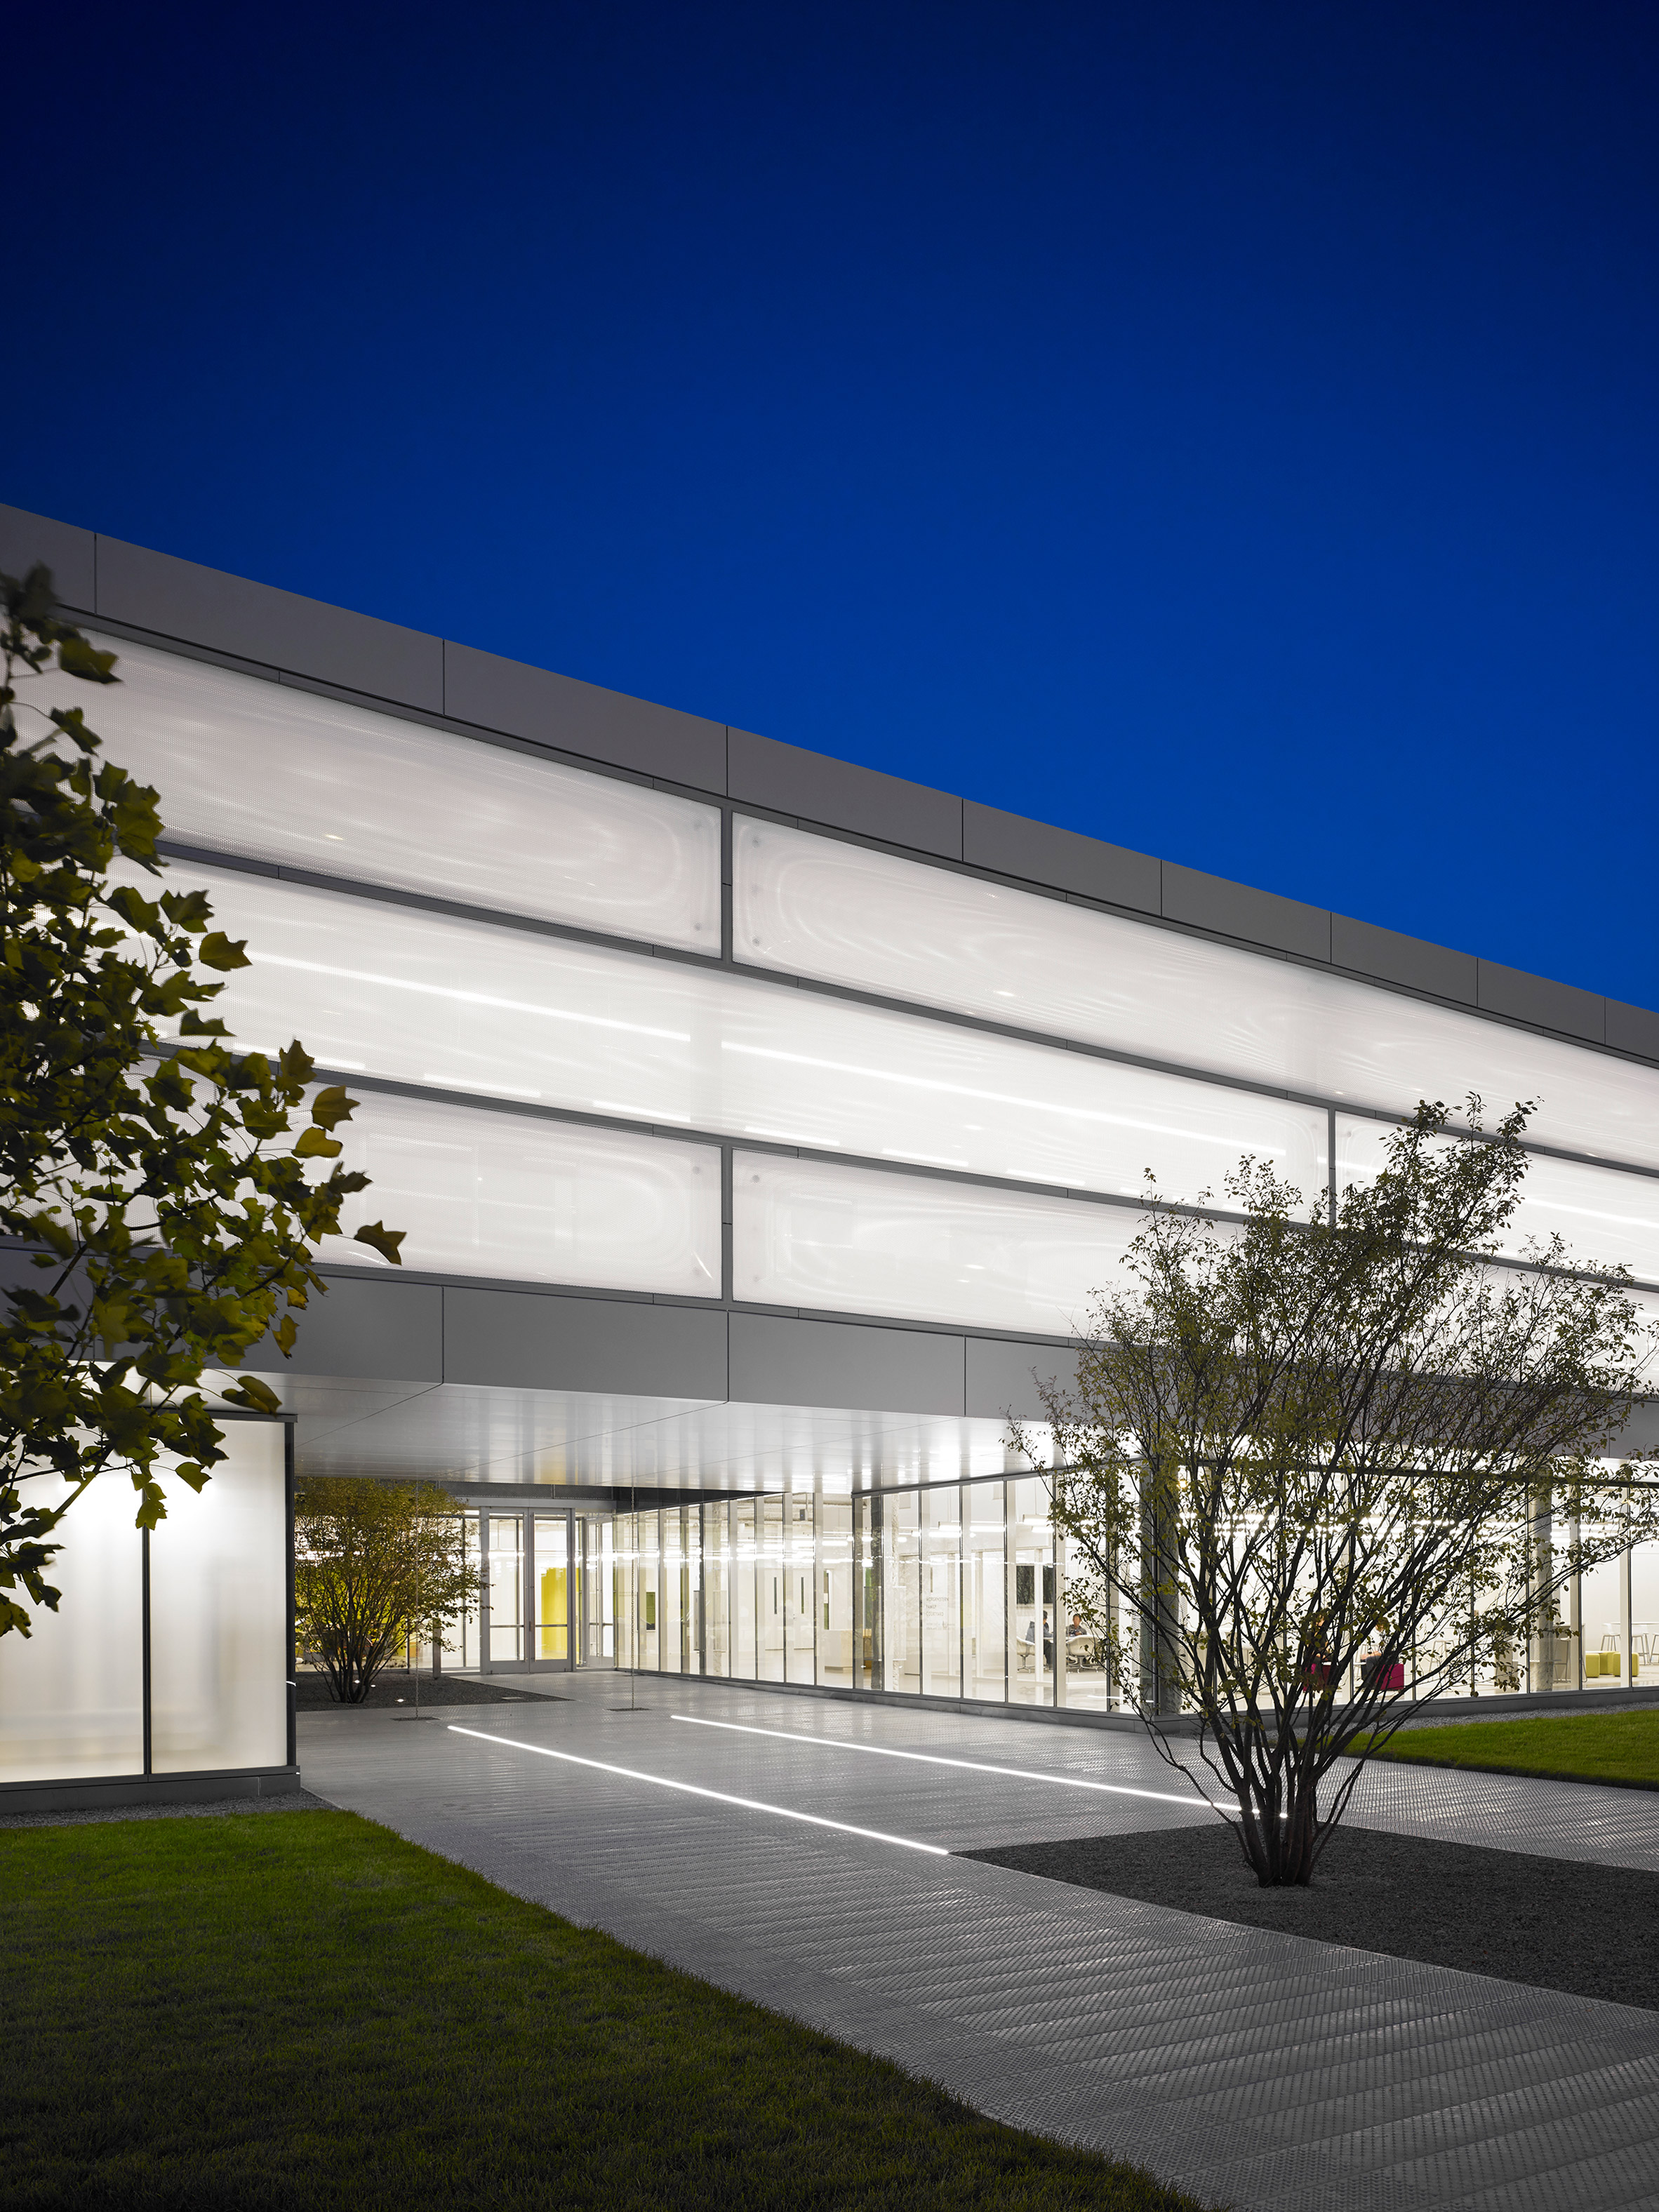 John Ronan wraps IIT's Kaplan Institute in ETFE and glass